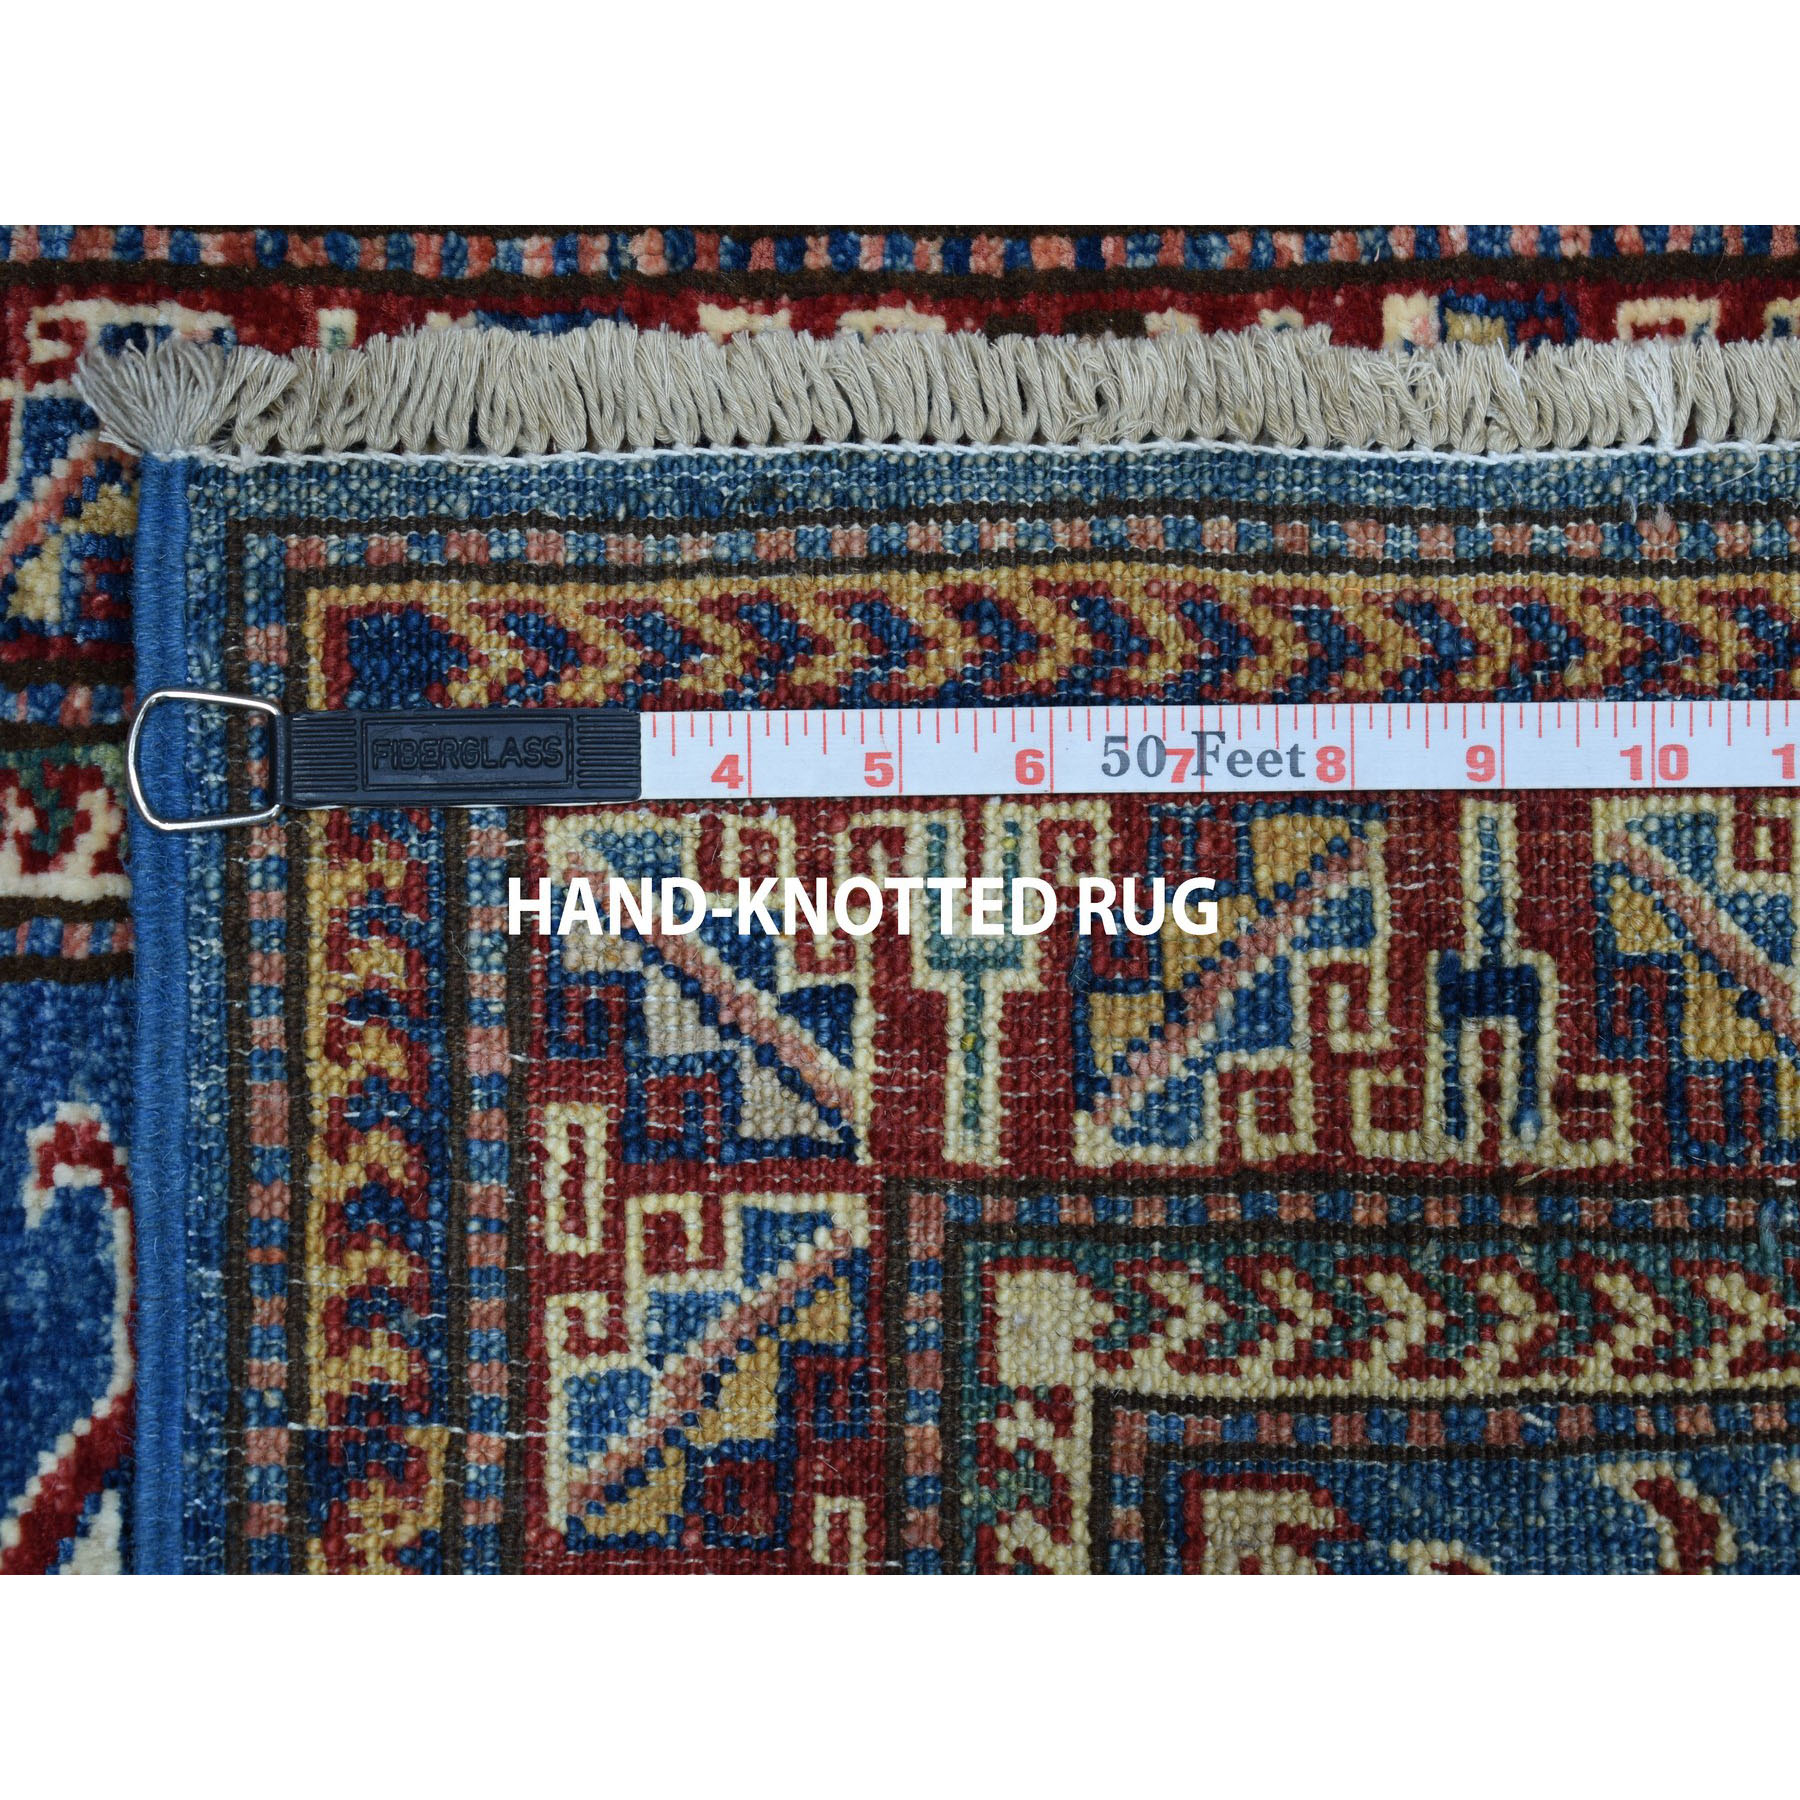 2-x2-10  Blue Super Kazak Pure Wool Geometric Design Hand-Knotted Oriental Rug 